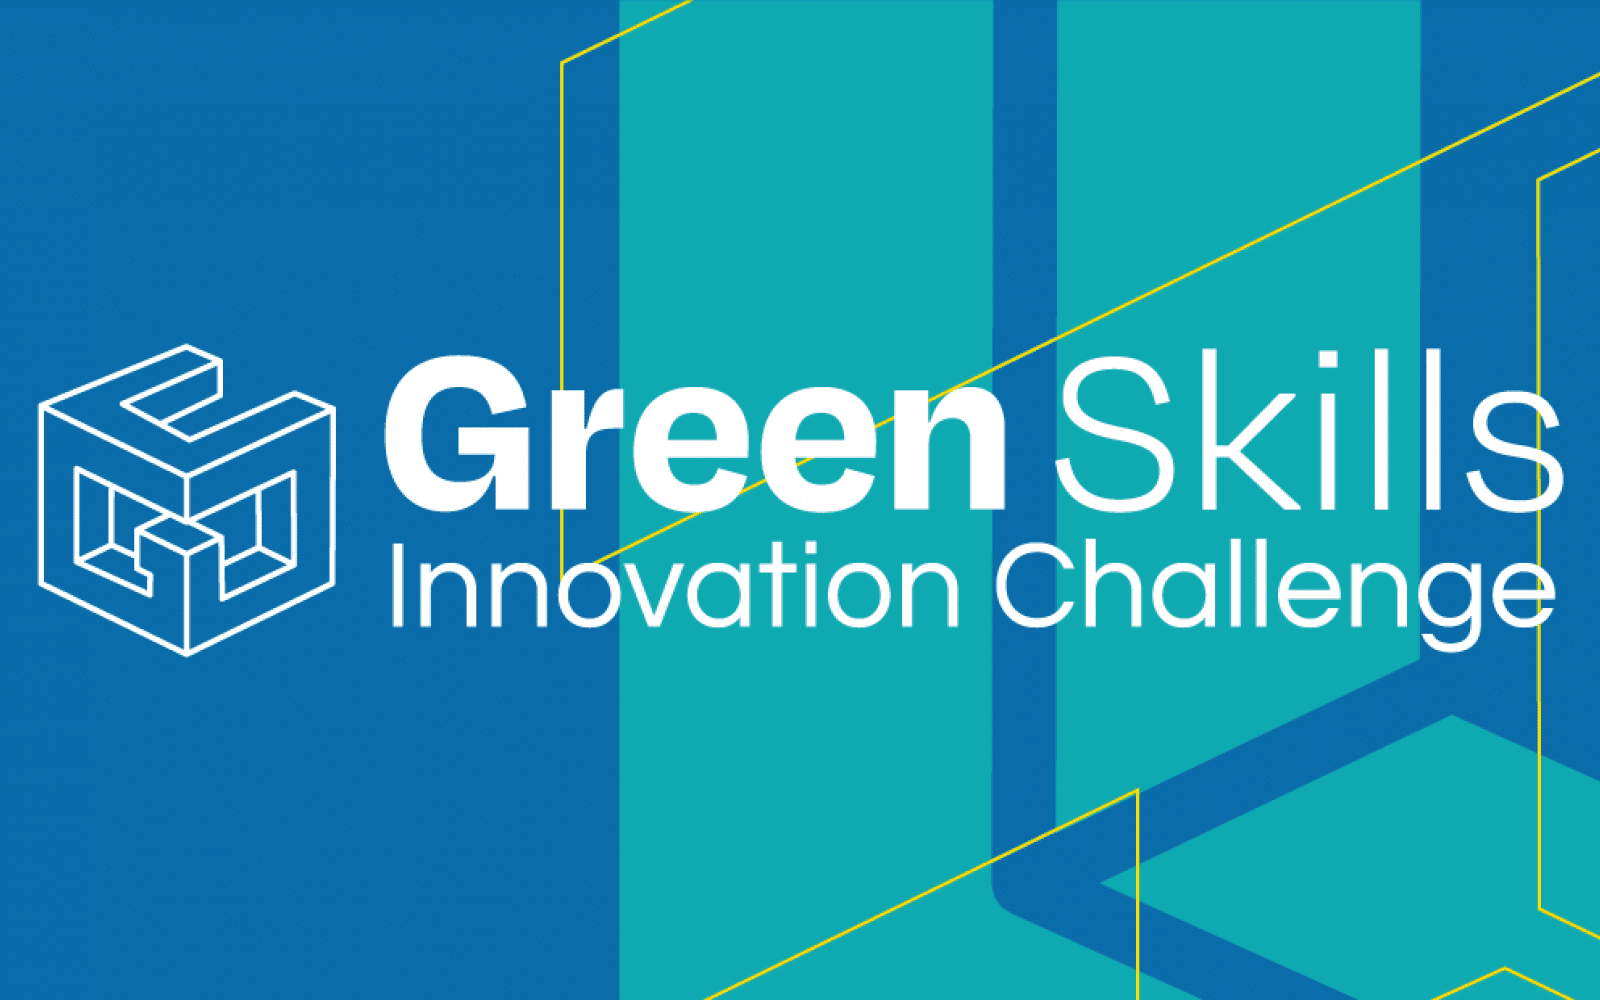 green skills innovation challenge banner